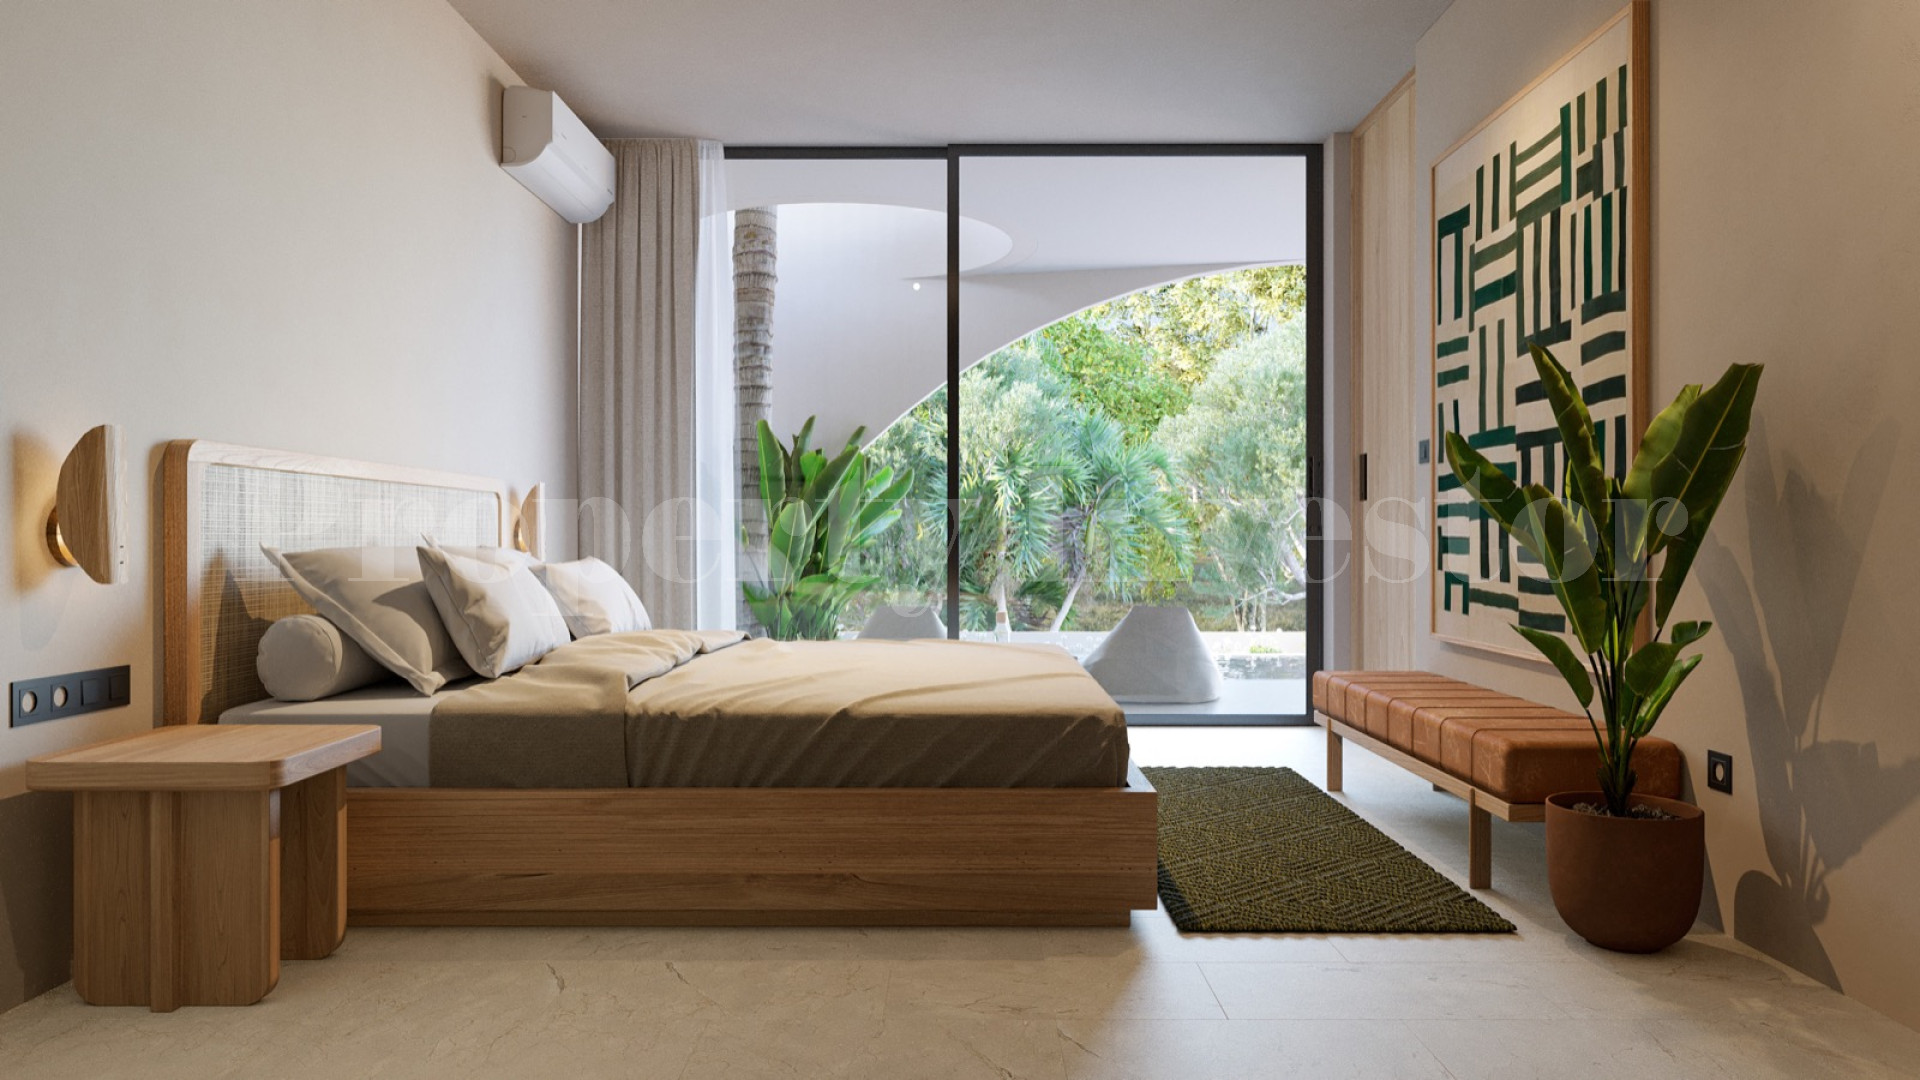 Modern Off-Plan 2 Bedroom Oceanview Luxury Designer Villas for Sale in Uluwatu, Bali from $239,000